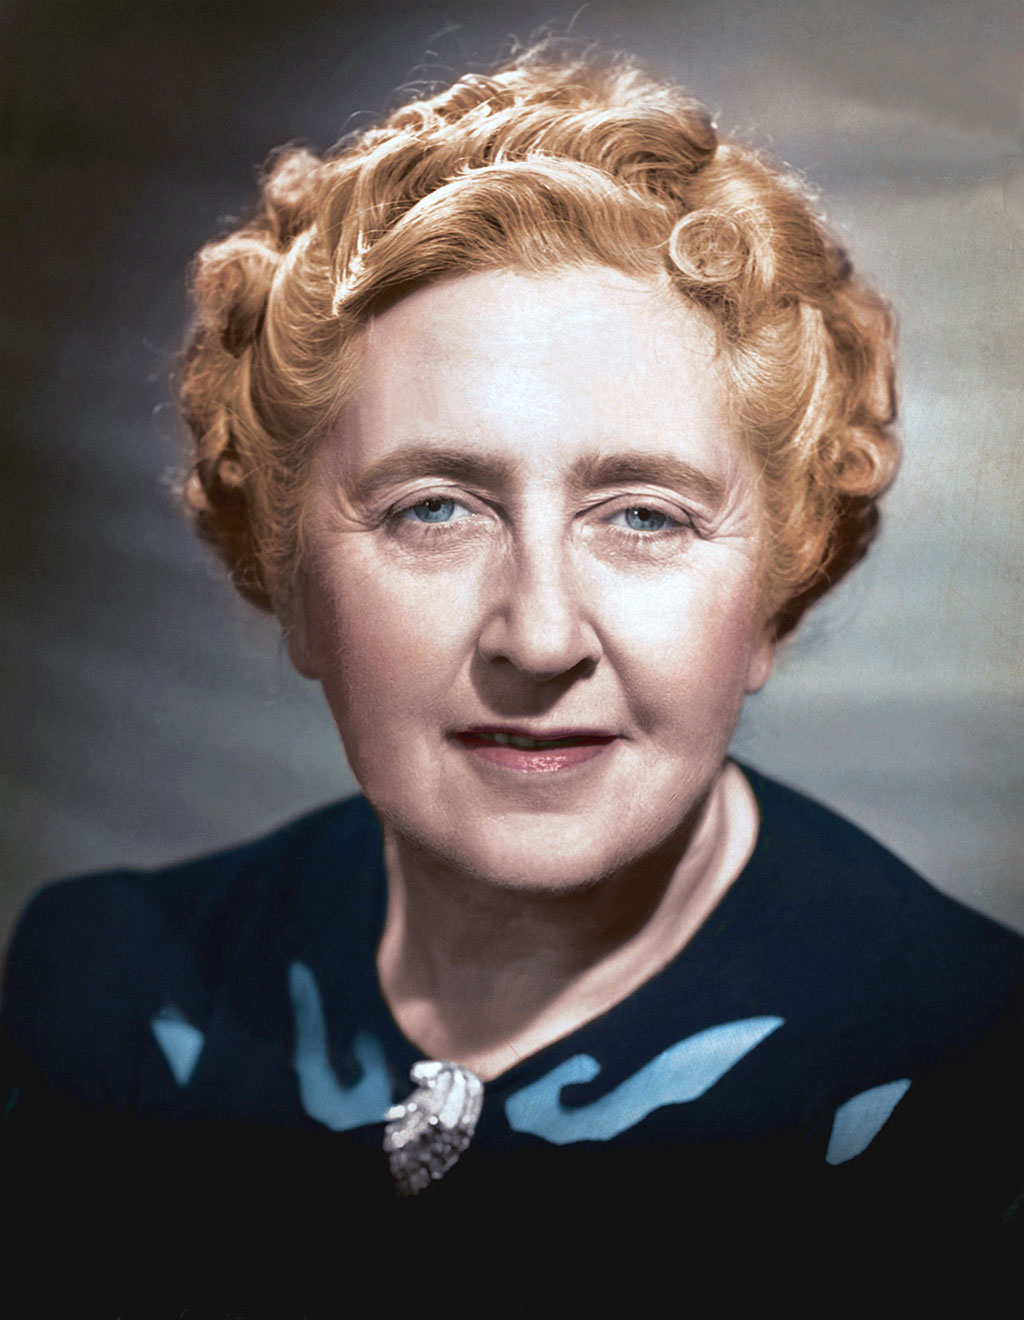 Mengenal Agatha Christie, Penulis Fiksi Terlaris Sepanjang Masa (10)